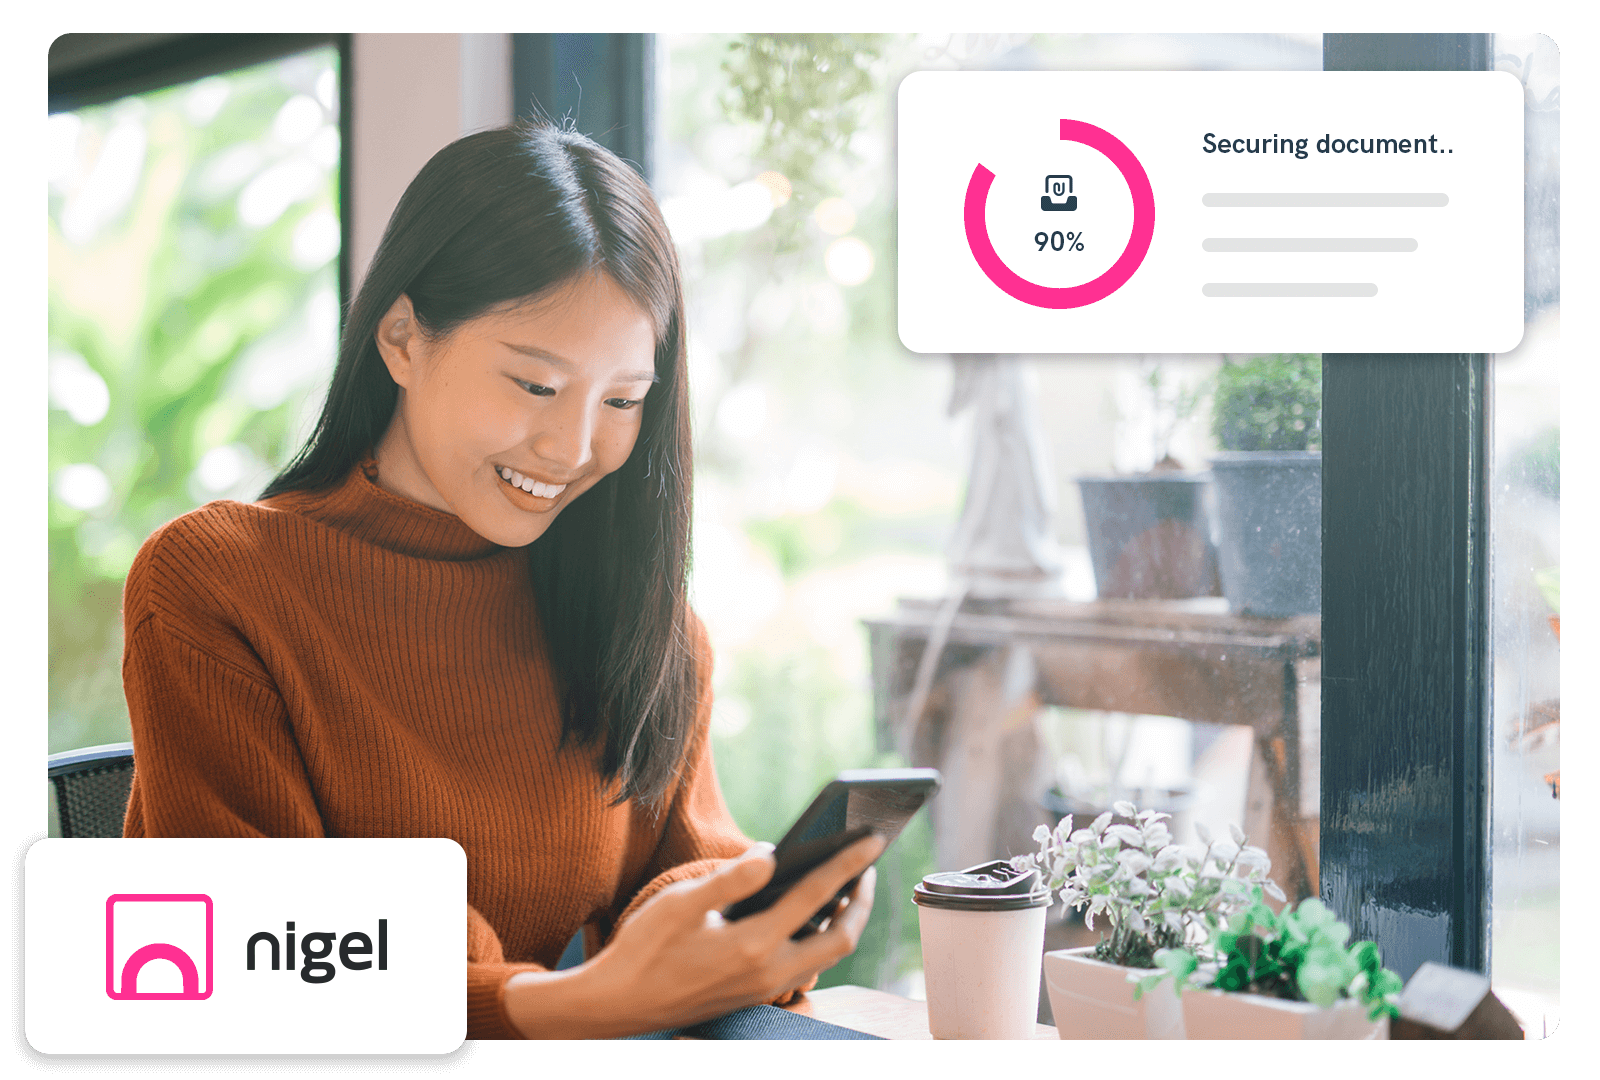 Female customer using smartphone to store documents using nigel app